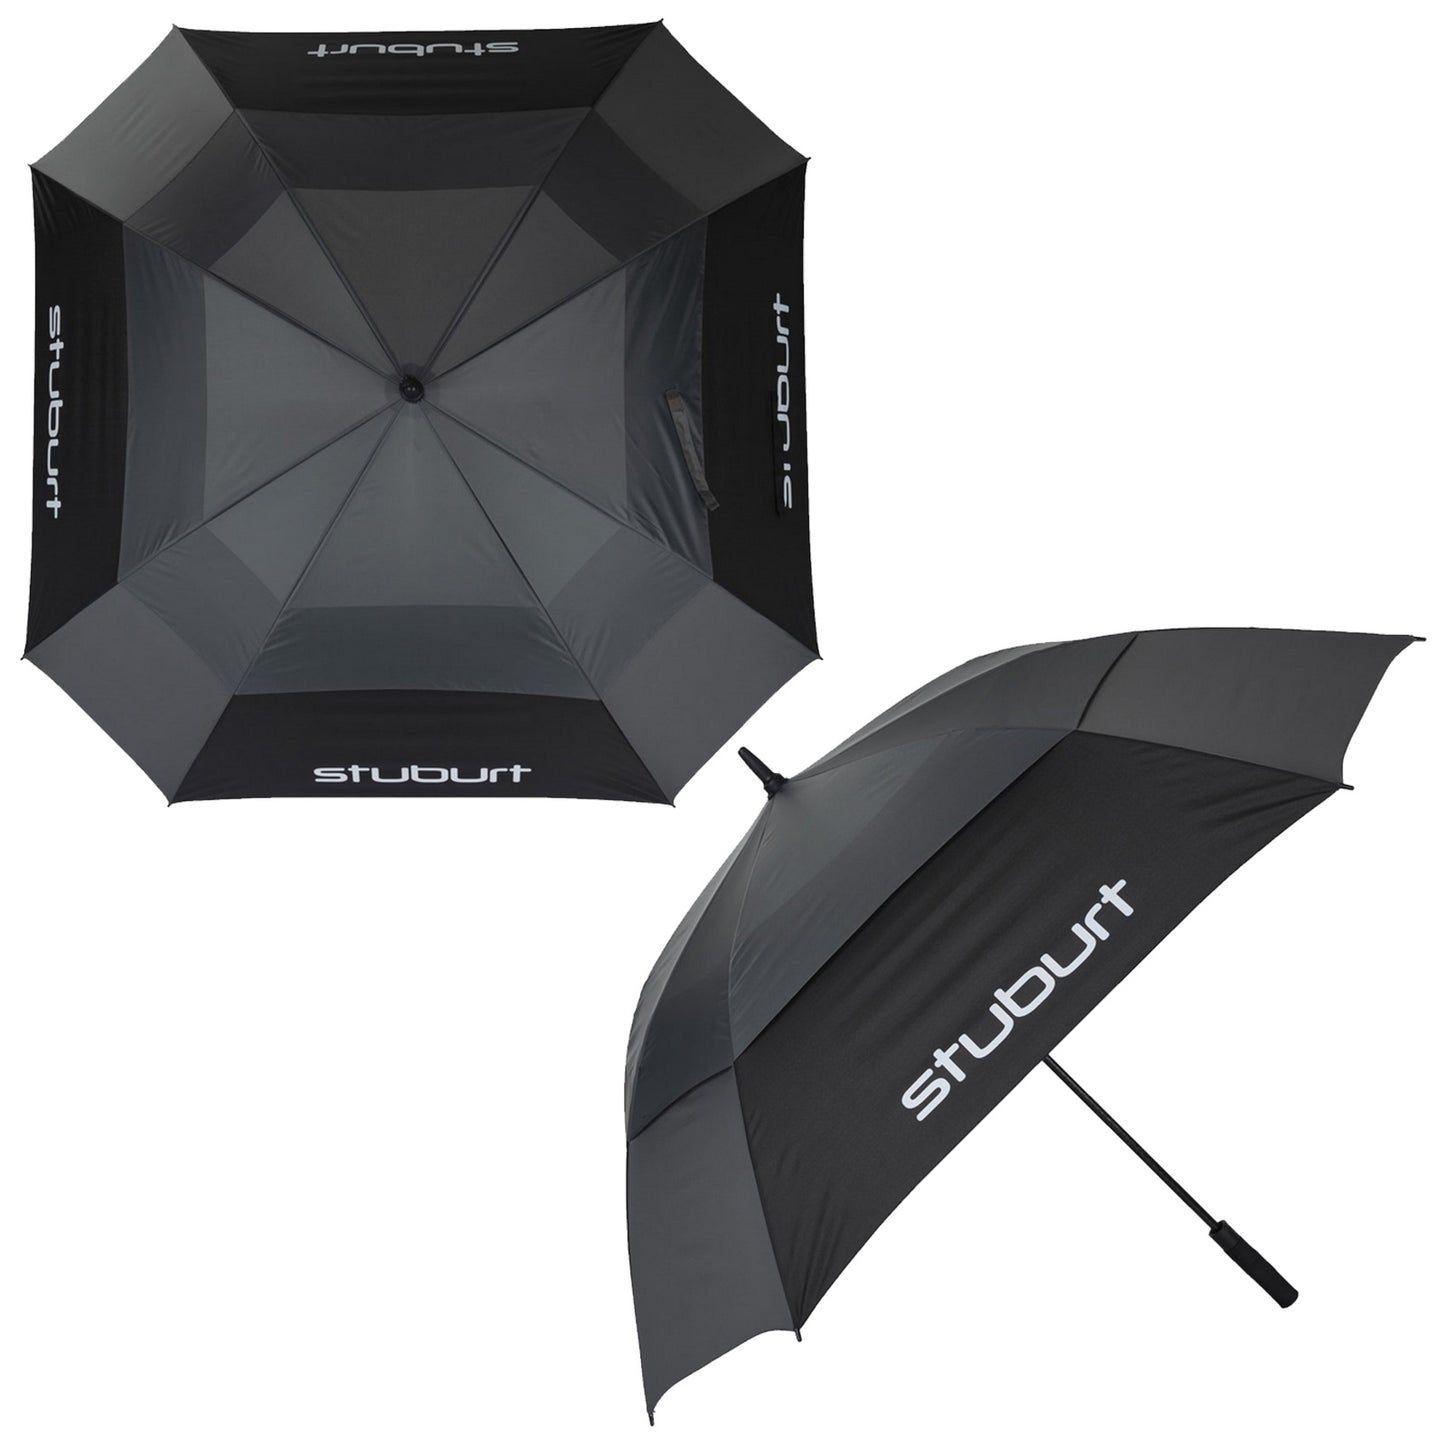 Stuburt 66" Double Canopy Umbrella